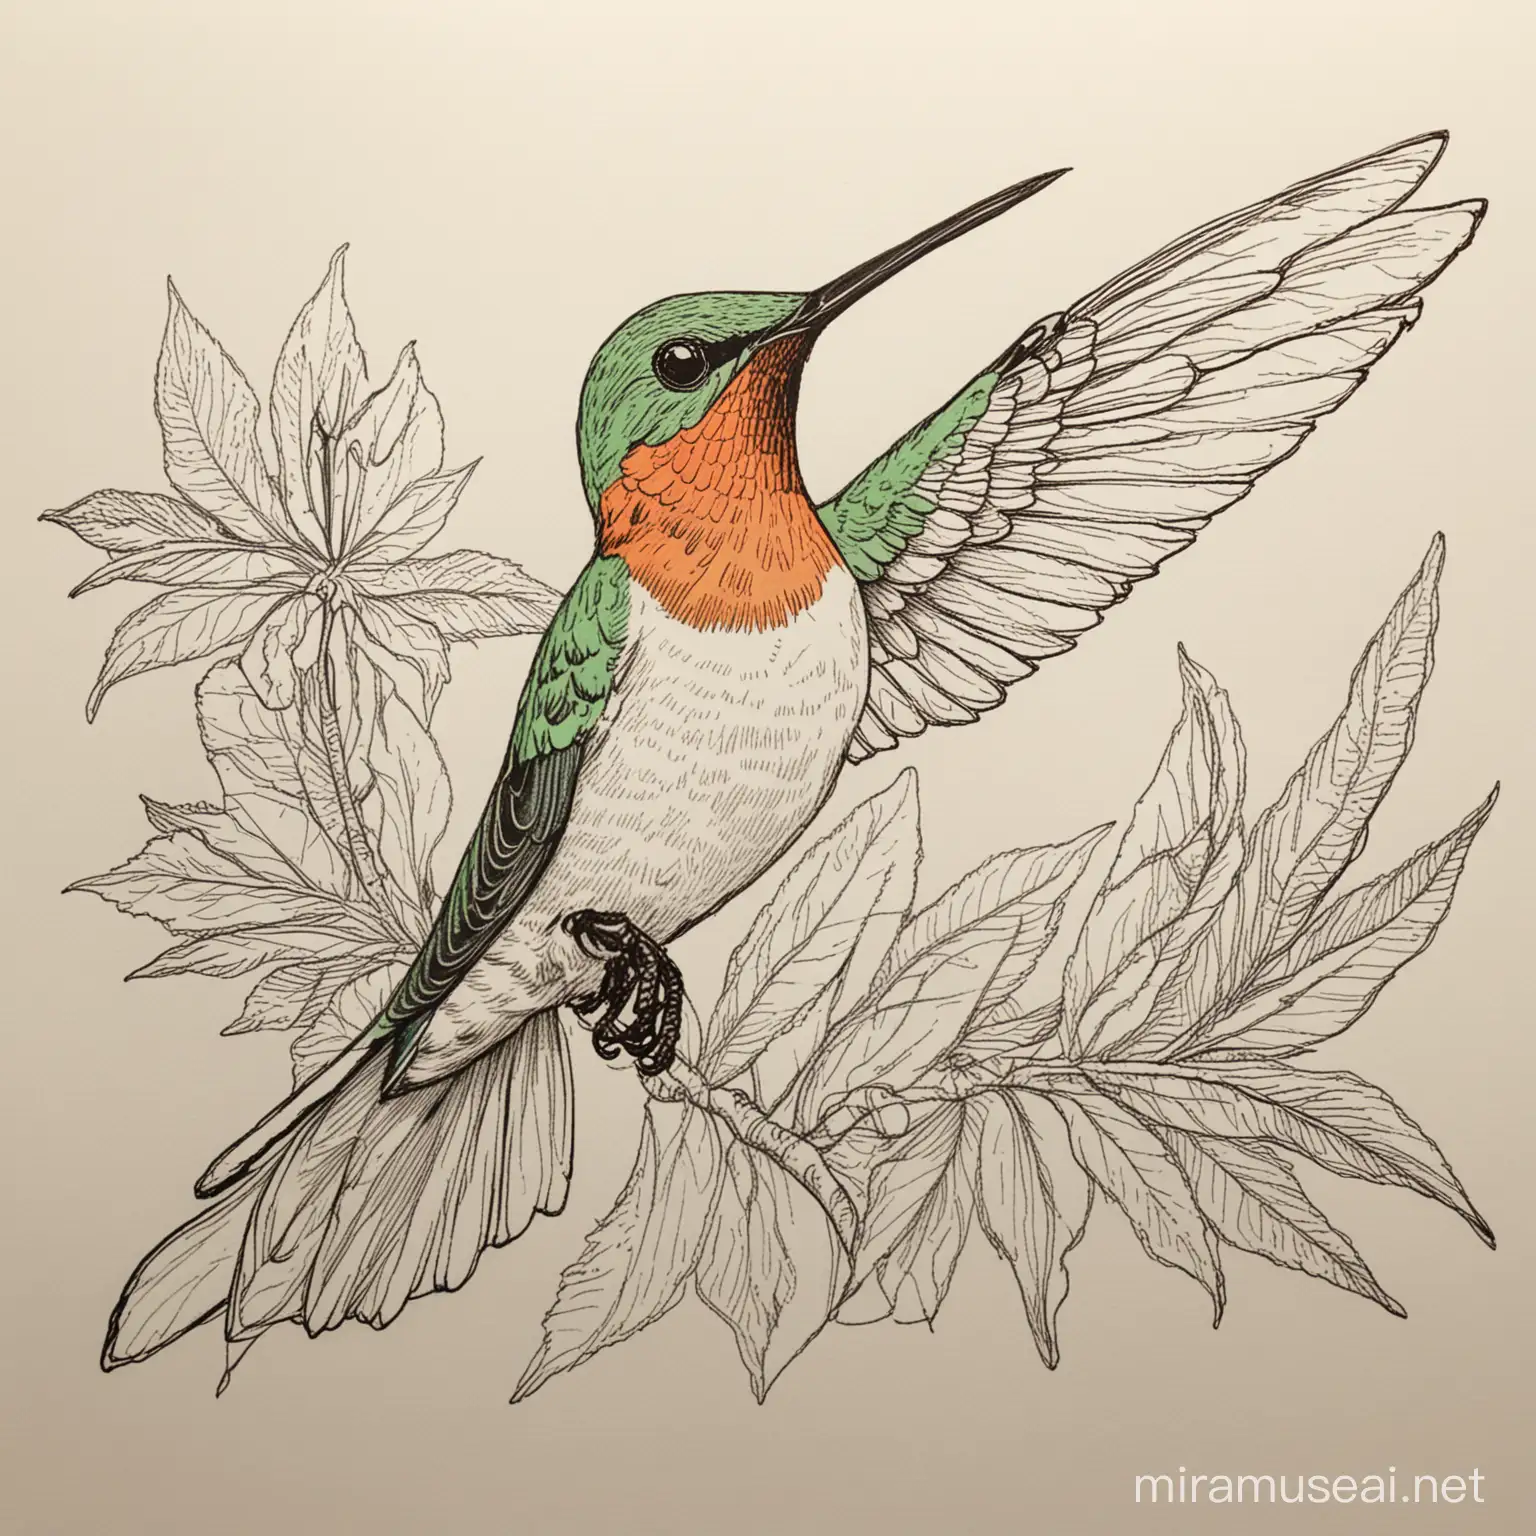 Cuban Hummingbird Delicate Audubon Style Sketch in Vibrant Colors